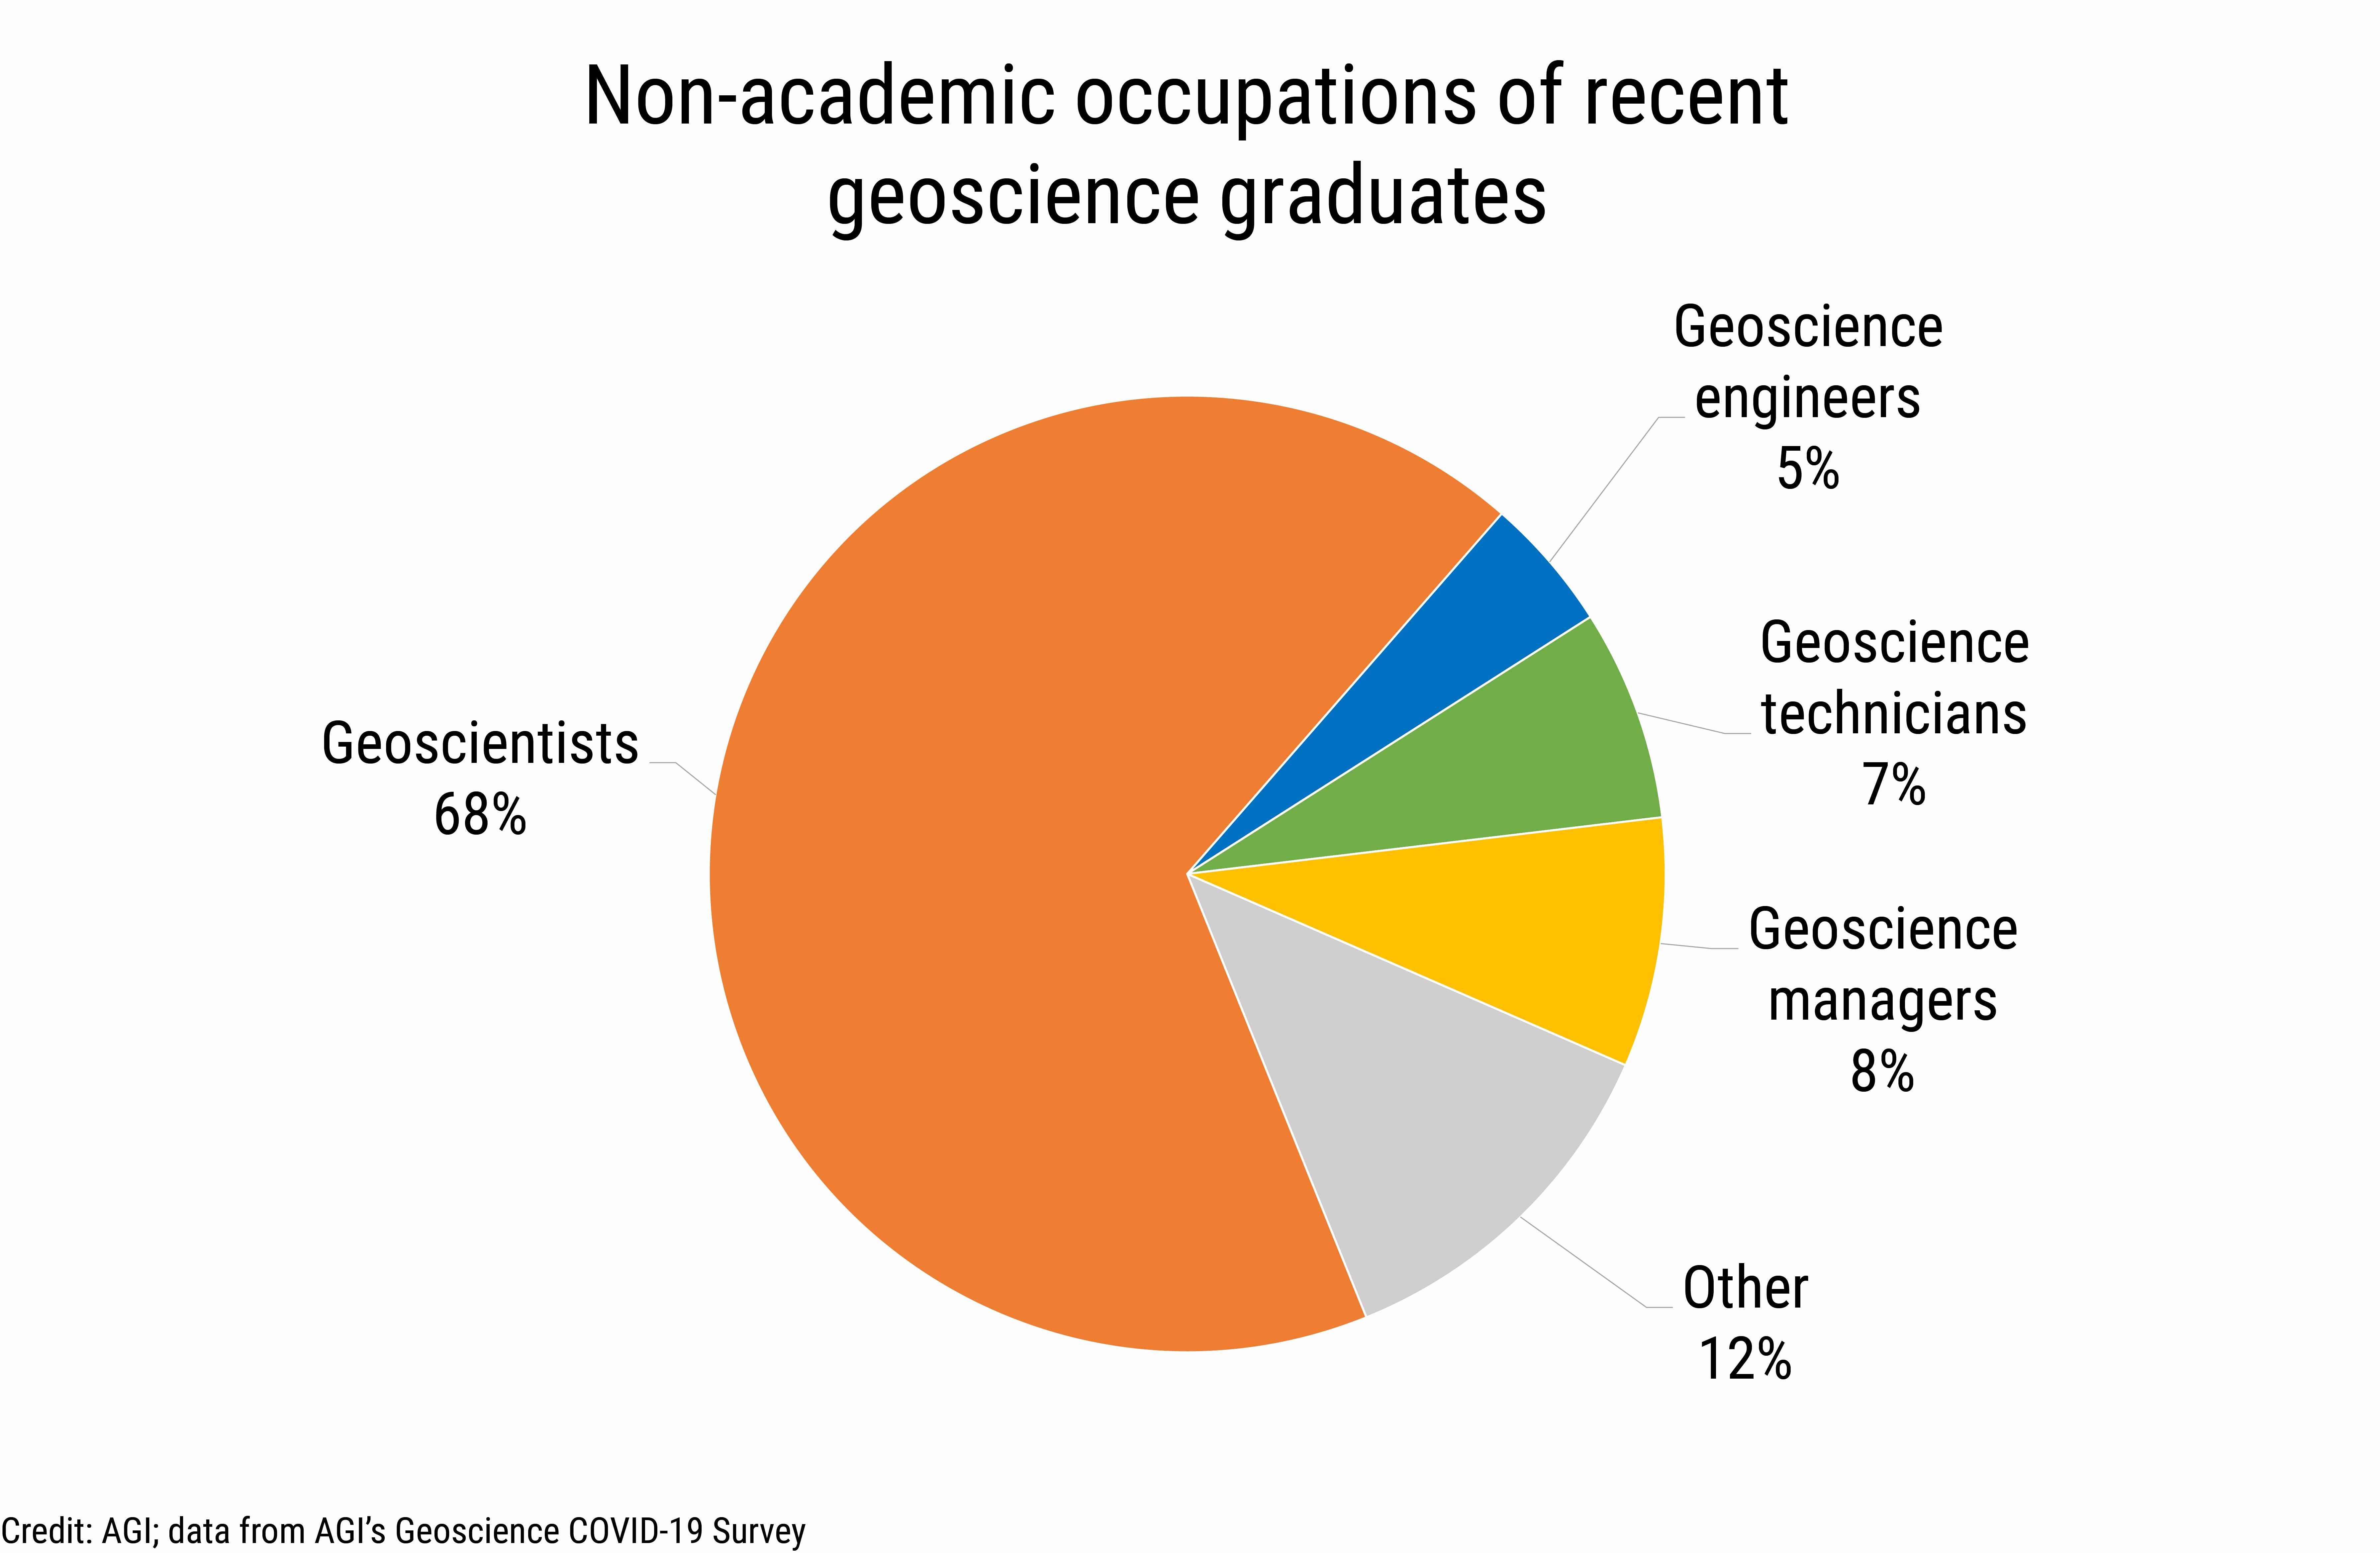 DB_2020-019 chart 04: Non-academic occupations of recent geoscience graduates (credit: AGI; data from AGI’s Geoscience COVID-19 Survey)